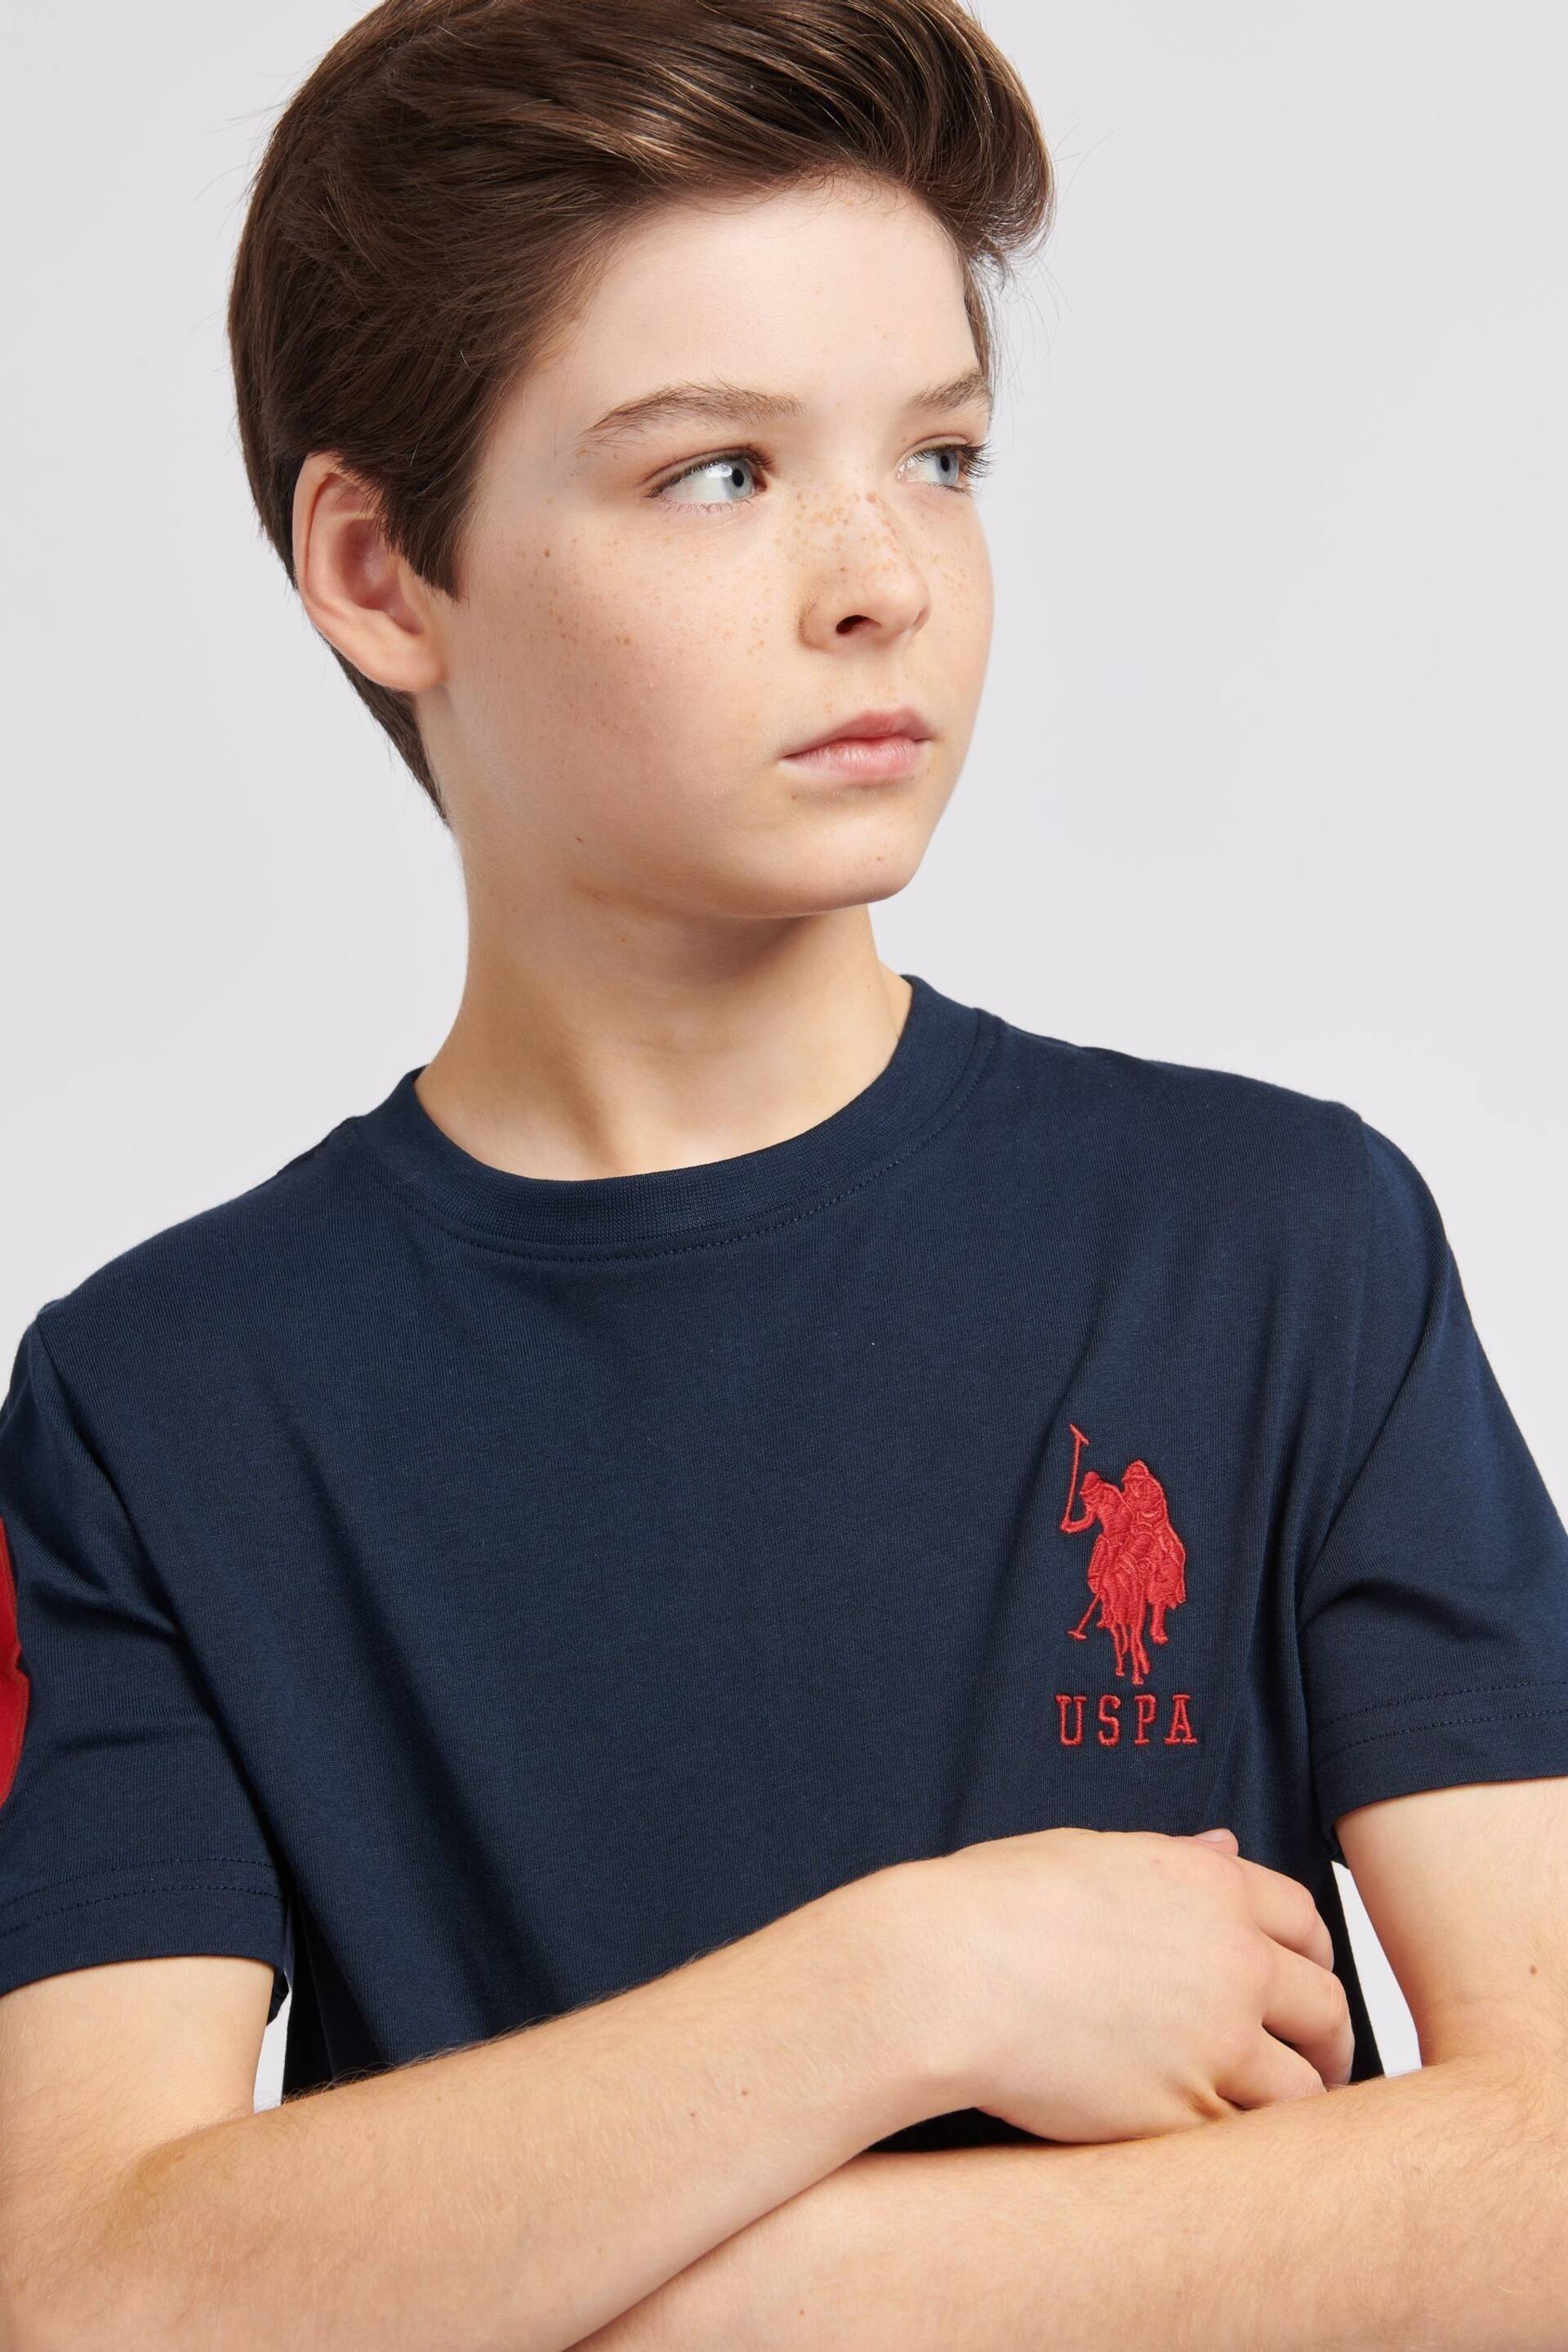 U.S. Polo Assn. Boys Player 3 T-Shirt - Image 2 of 8